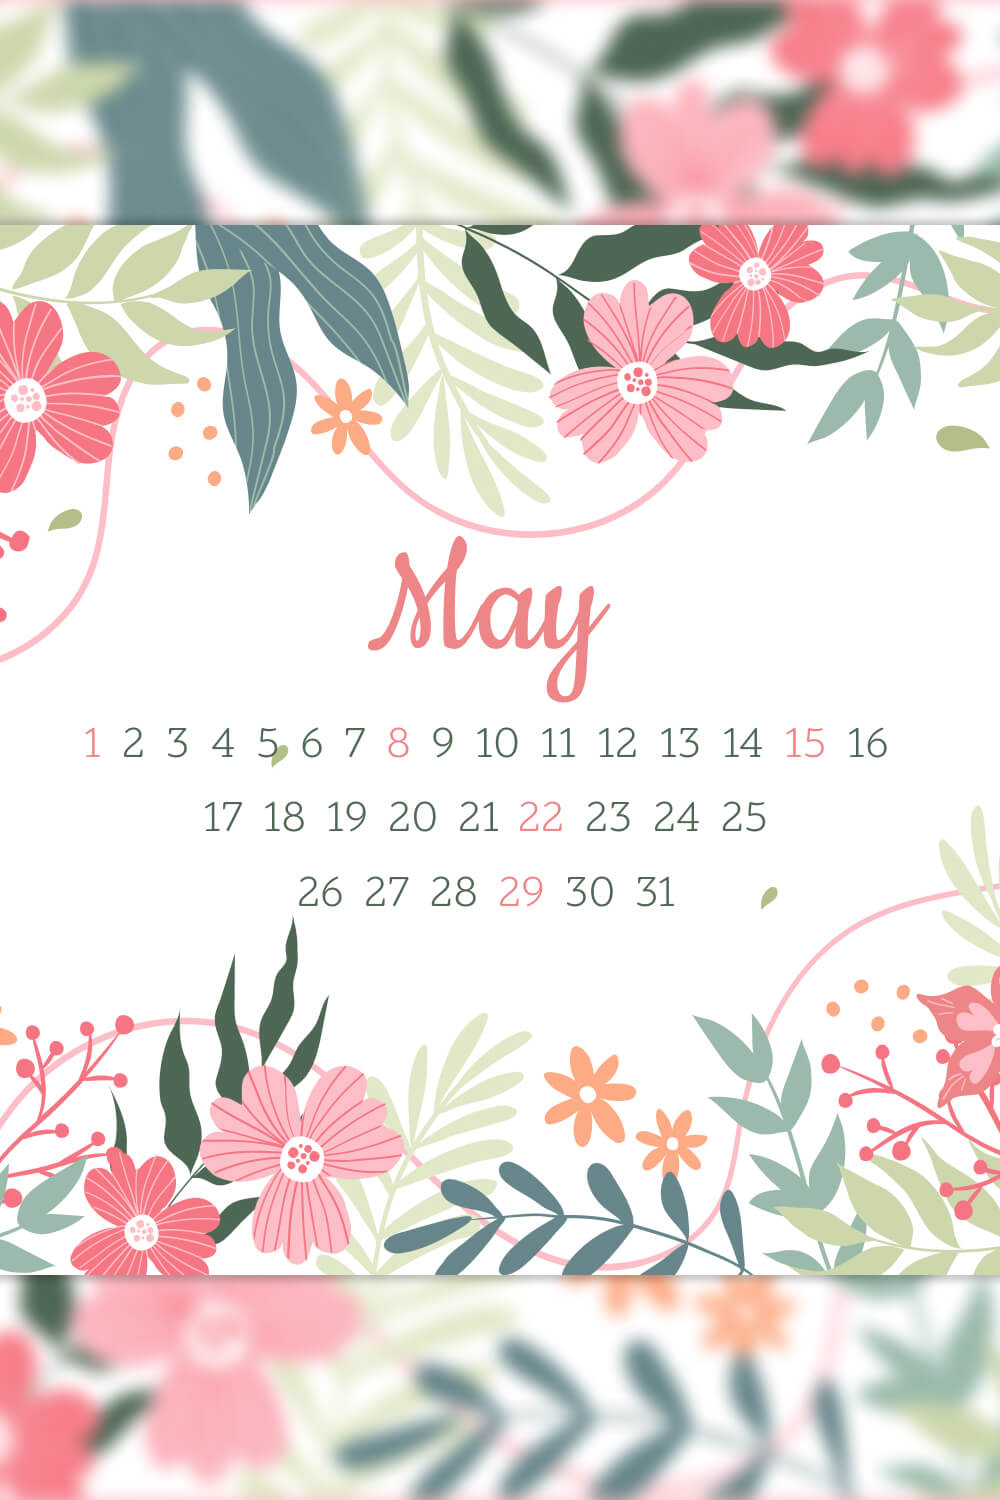 Free May Calendar Editable Template pinterest.